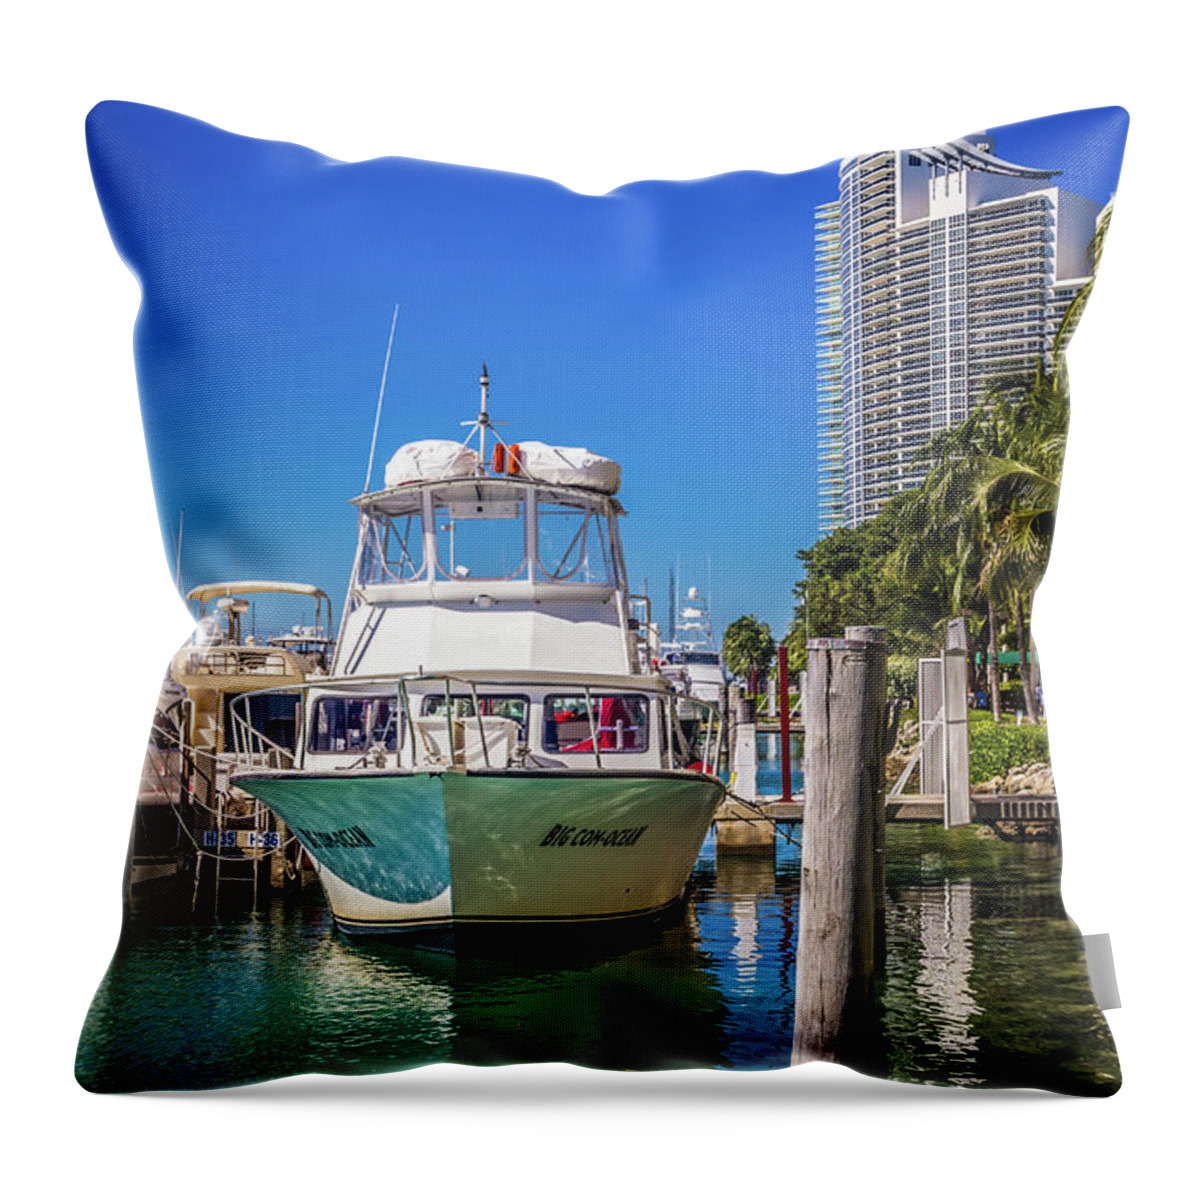 Luxury Yacht Artwork Throw Pillow featuring the photograph Luxury Yacht Artwork 4516 by Carlos Diaz